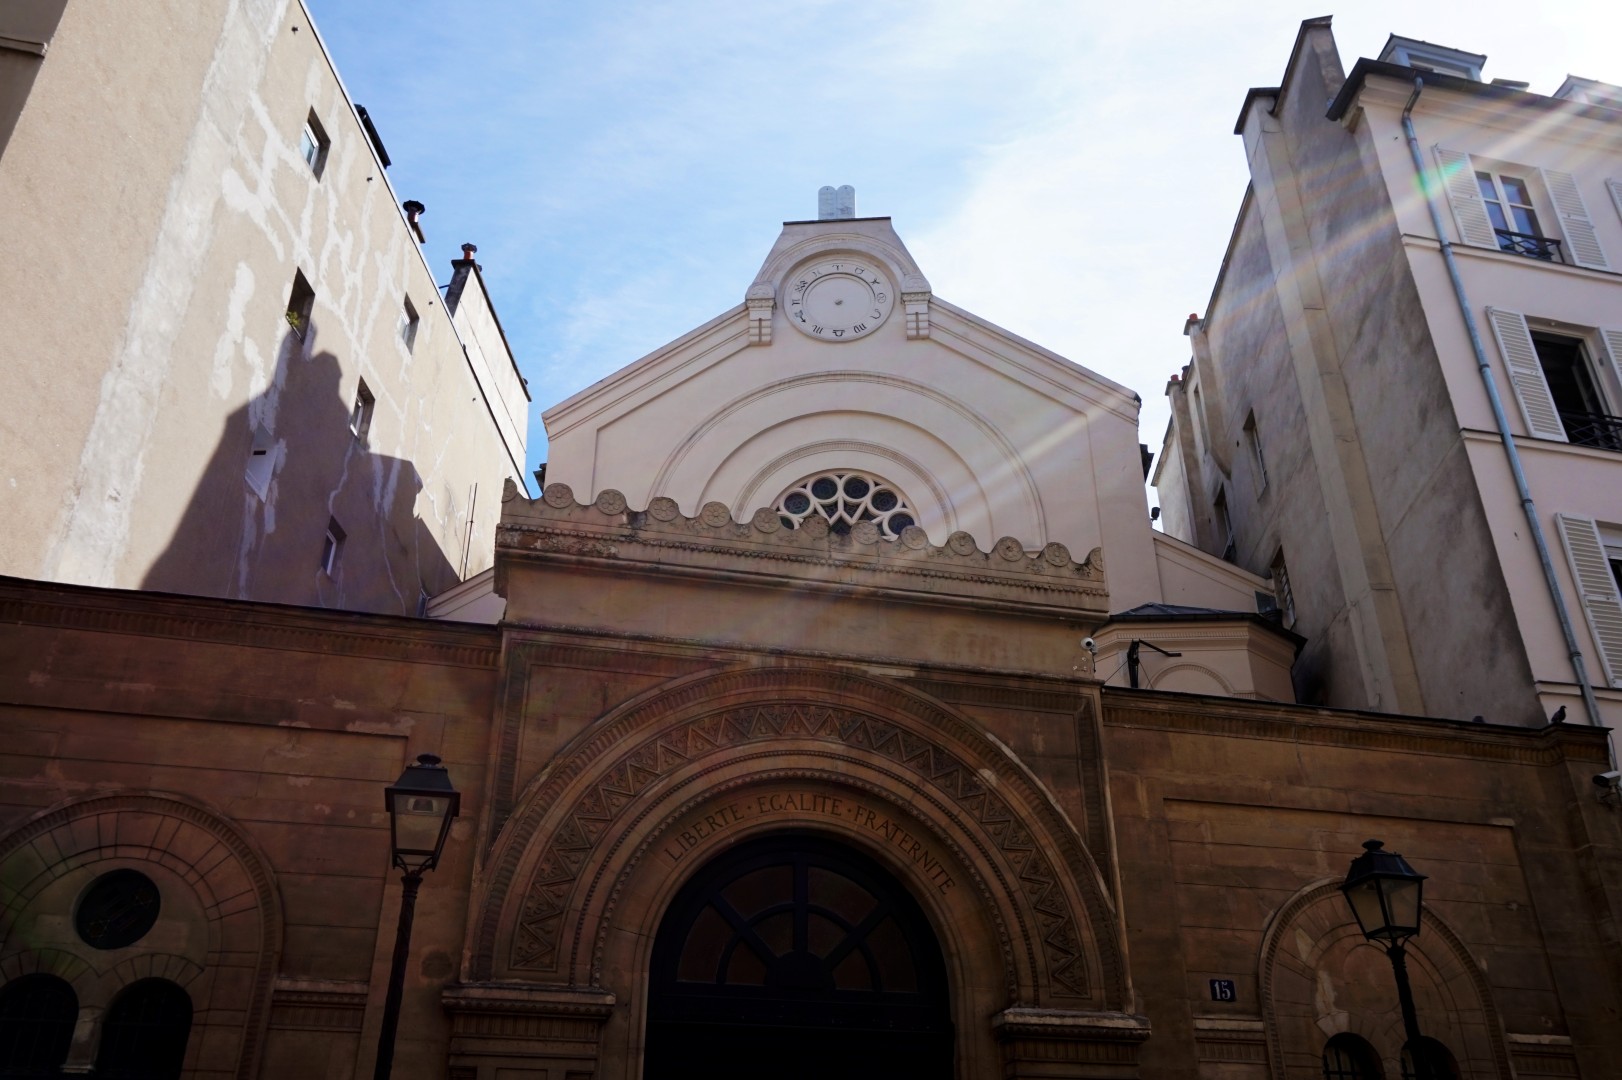 Balade dans le quartier Arts et Métier (3e) - Rue Notre Dame de Nazareth